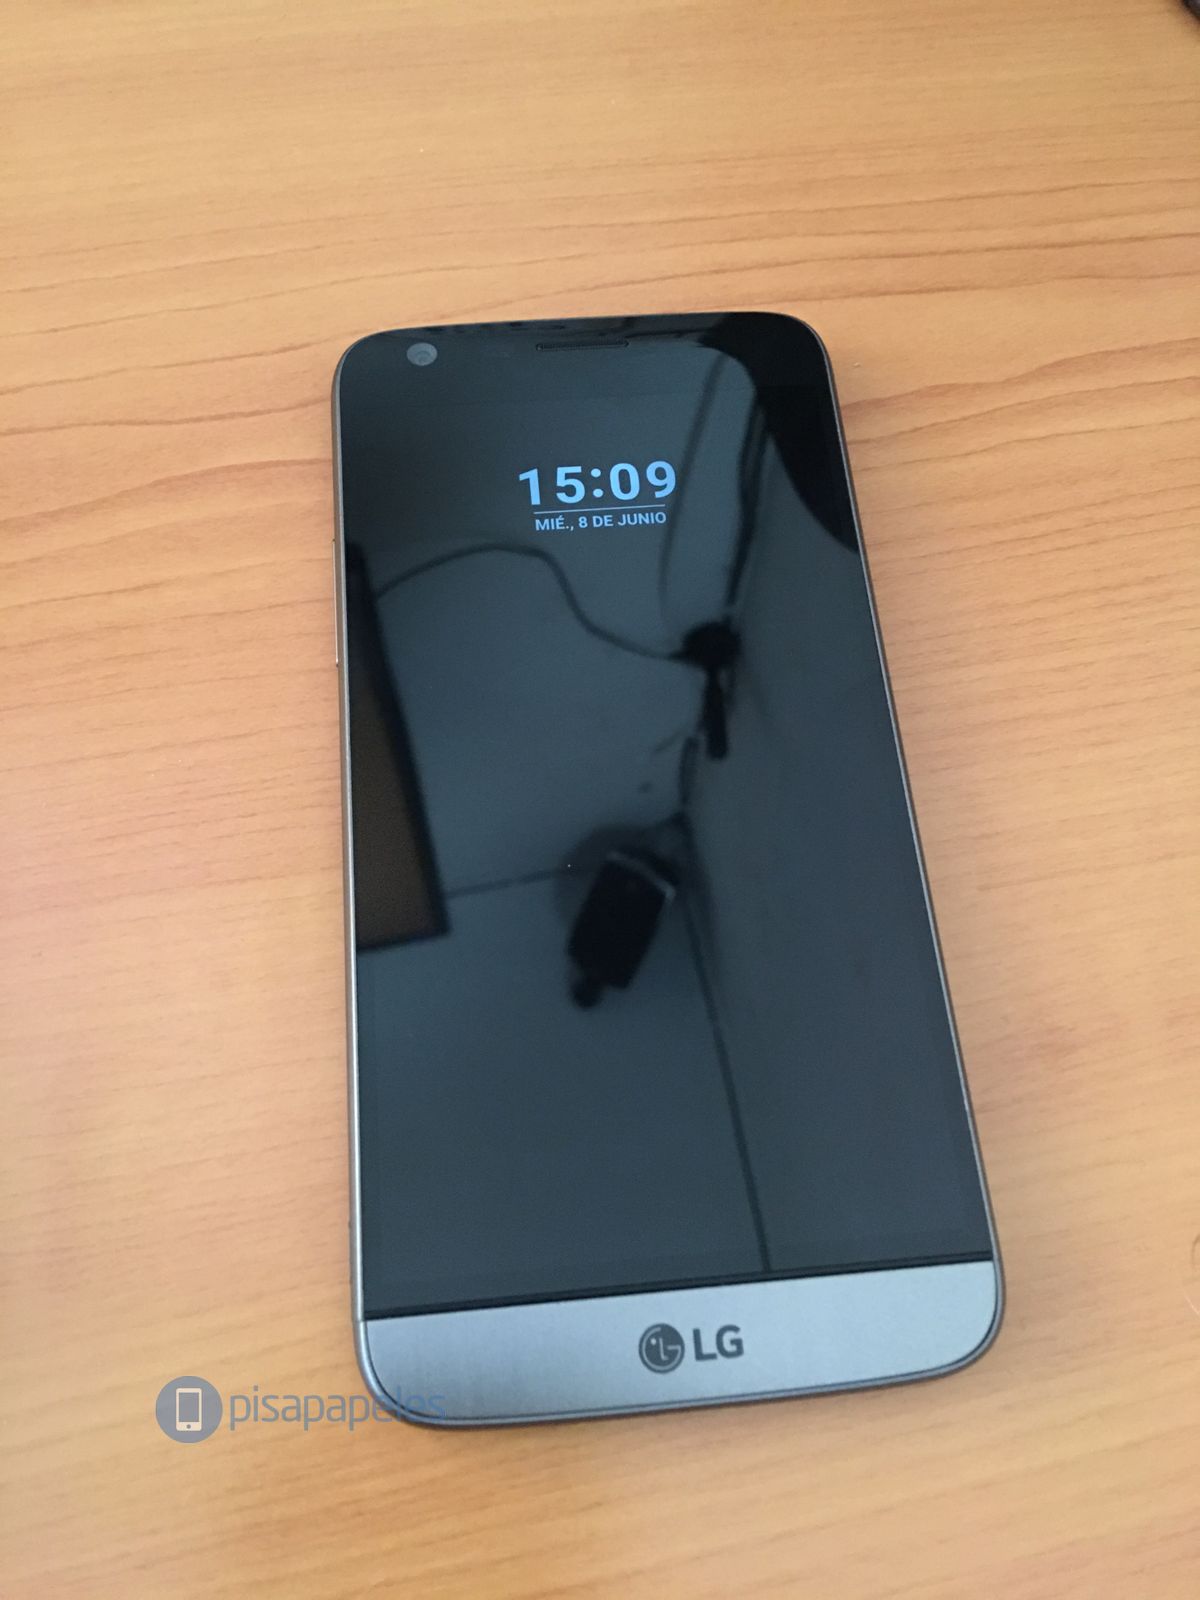 LG G5 PISAPAPELES.NET "width =" 350 "height =" 467